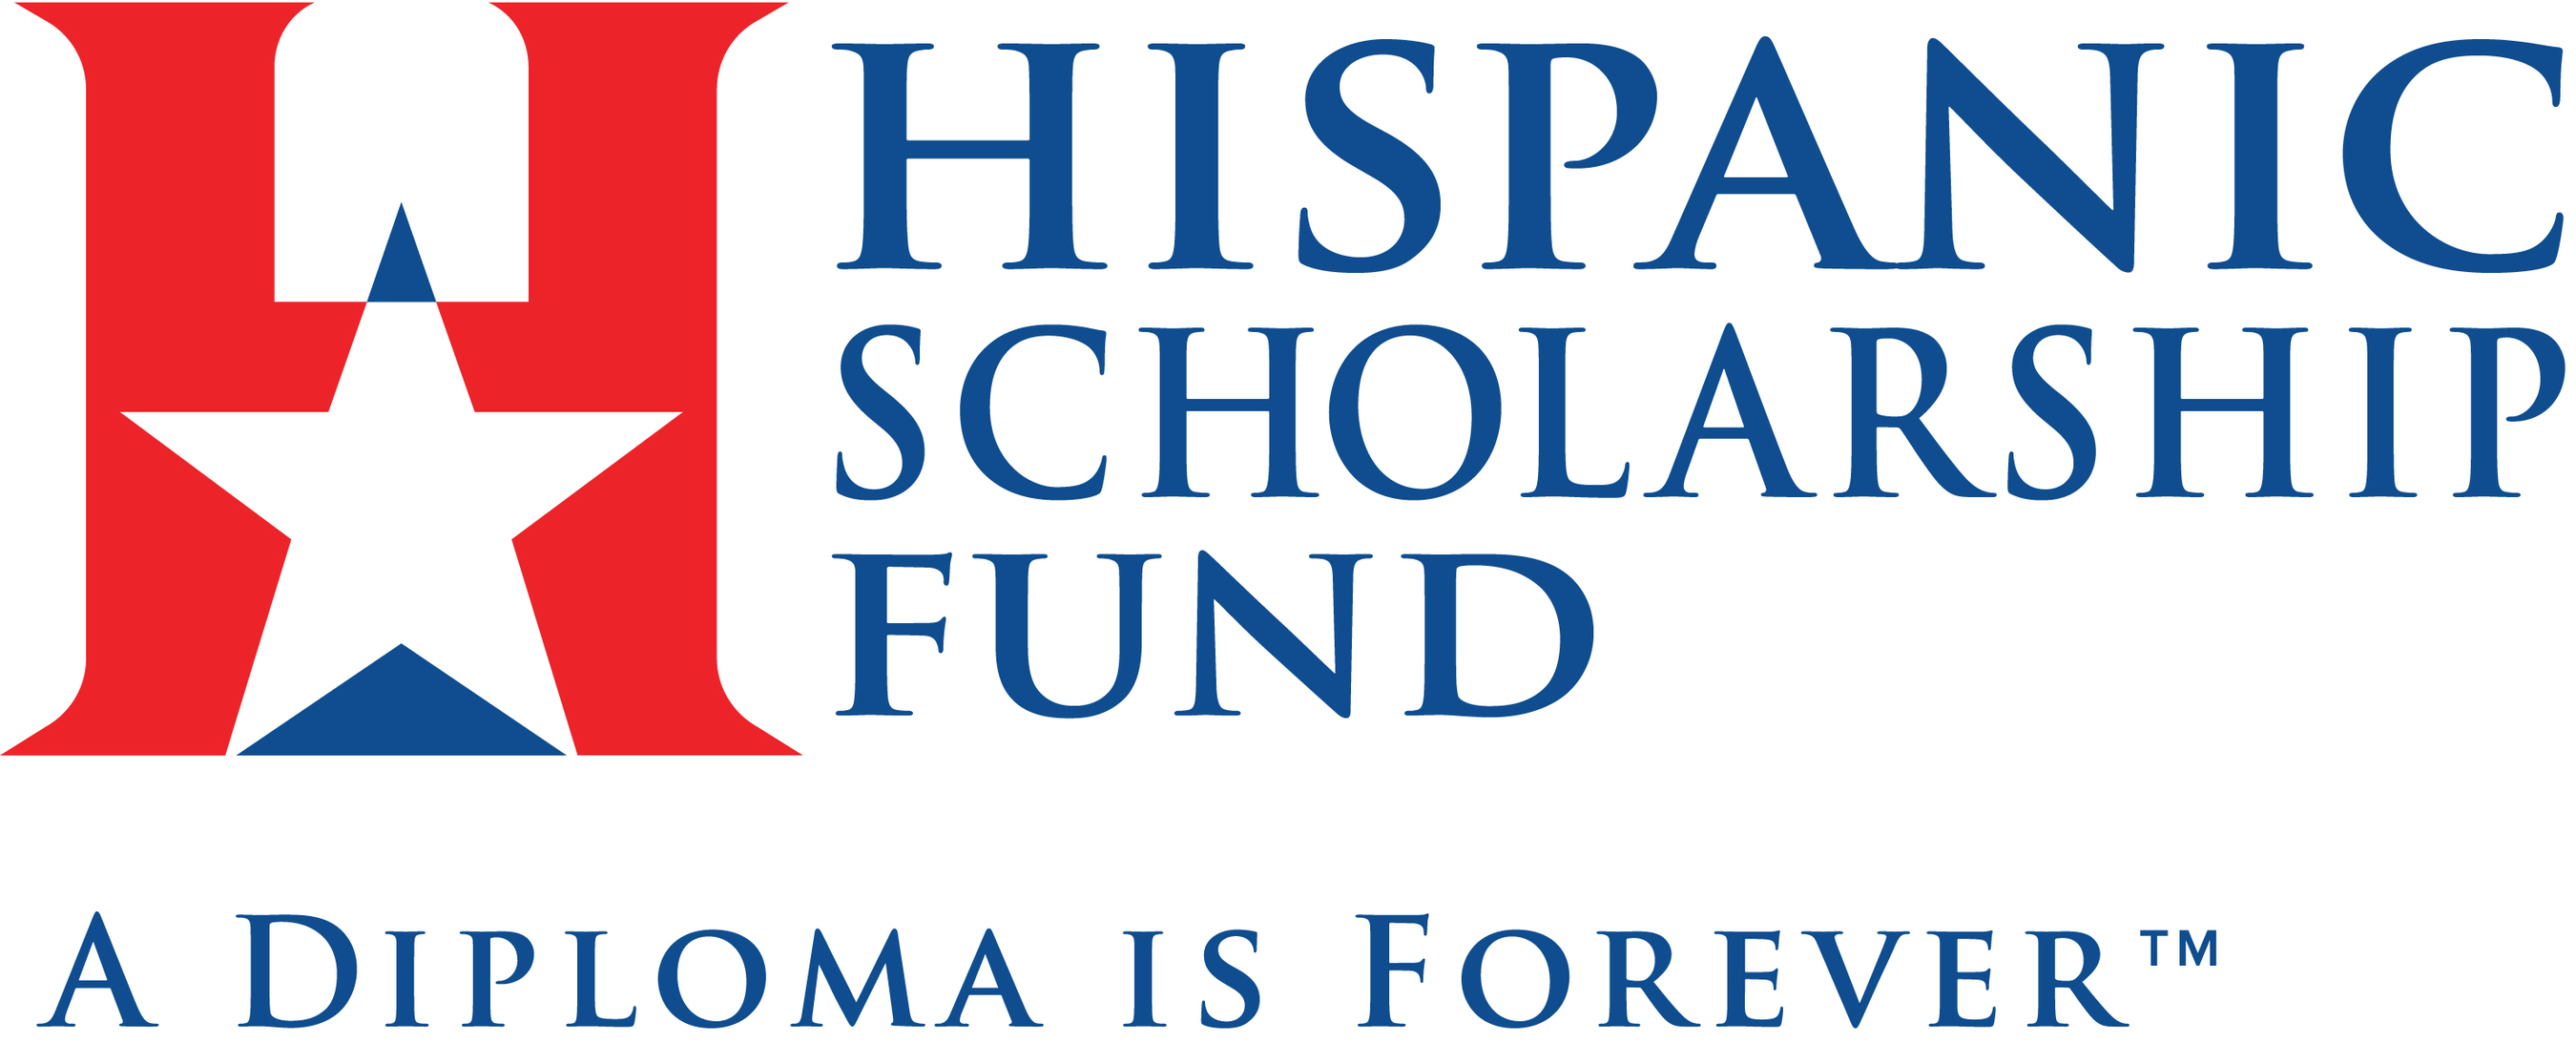 Hispanic Scholarship Fund.